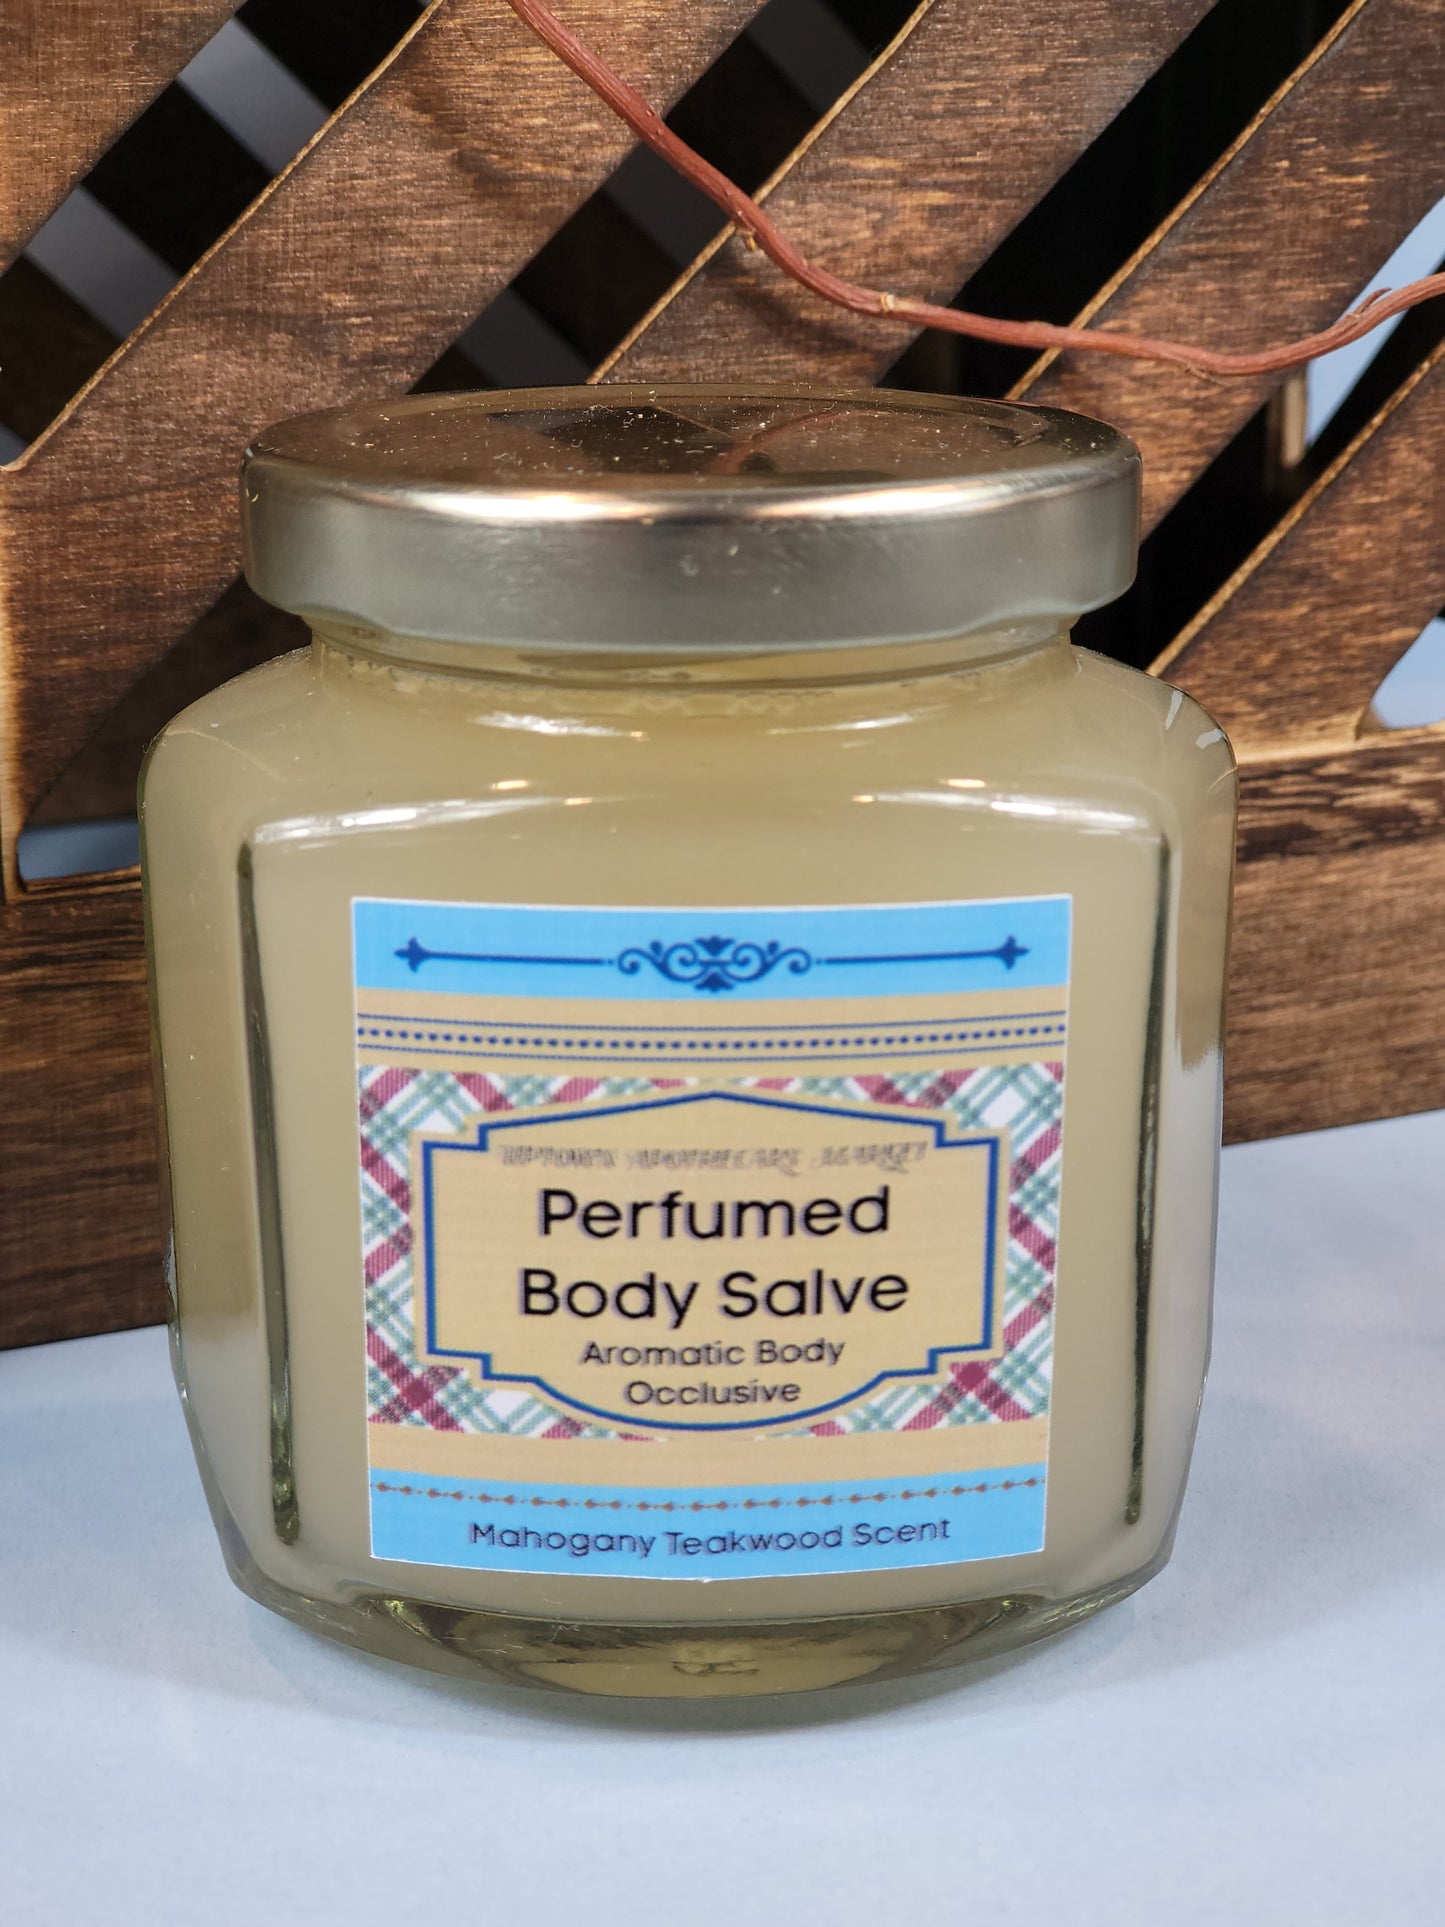 Perfumed Body Salve Aromatic Skin Occlusive Unisex Mahogany Teakwood E –  uptown apothecary market